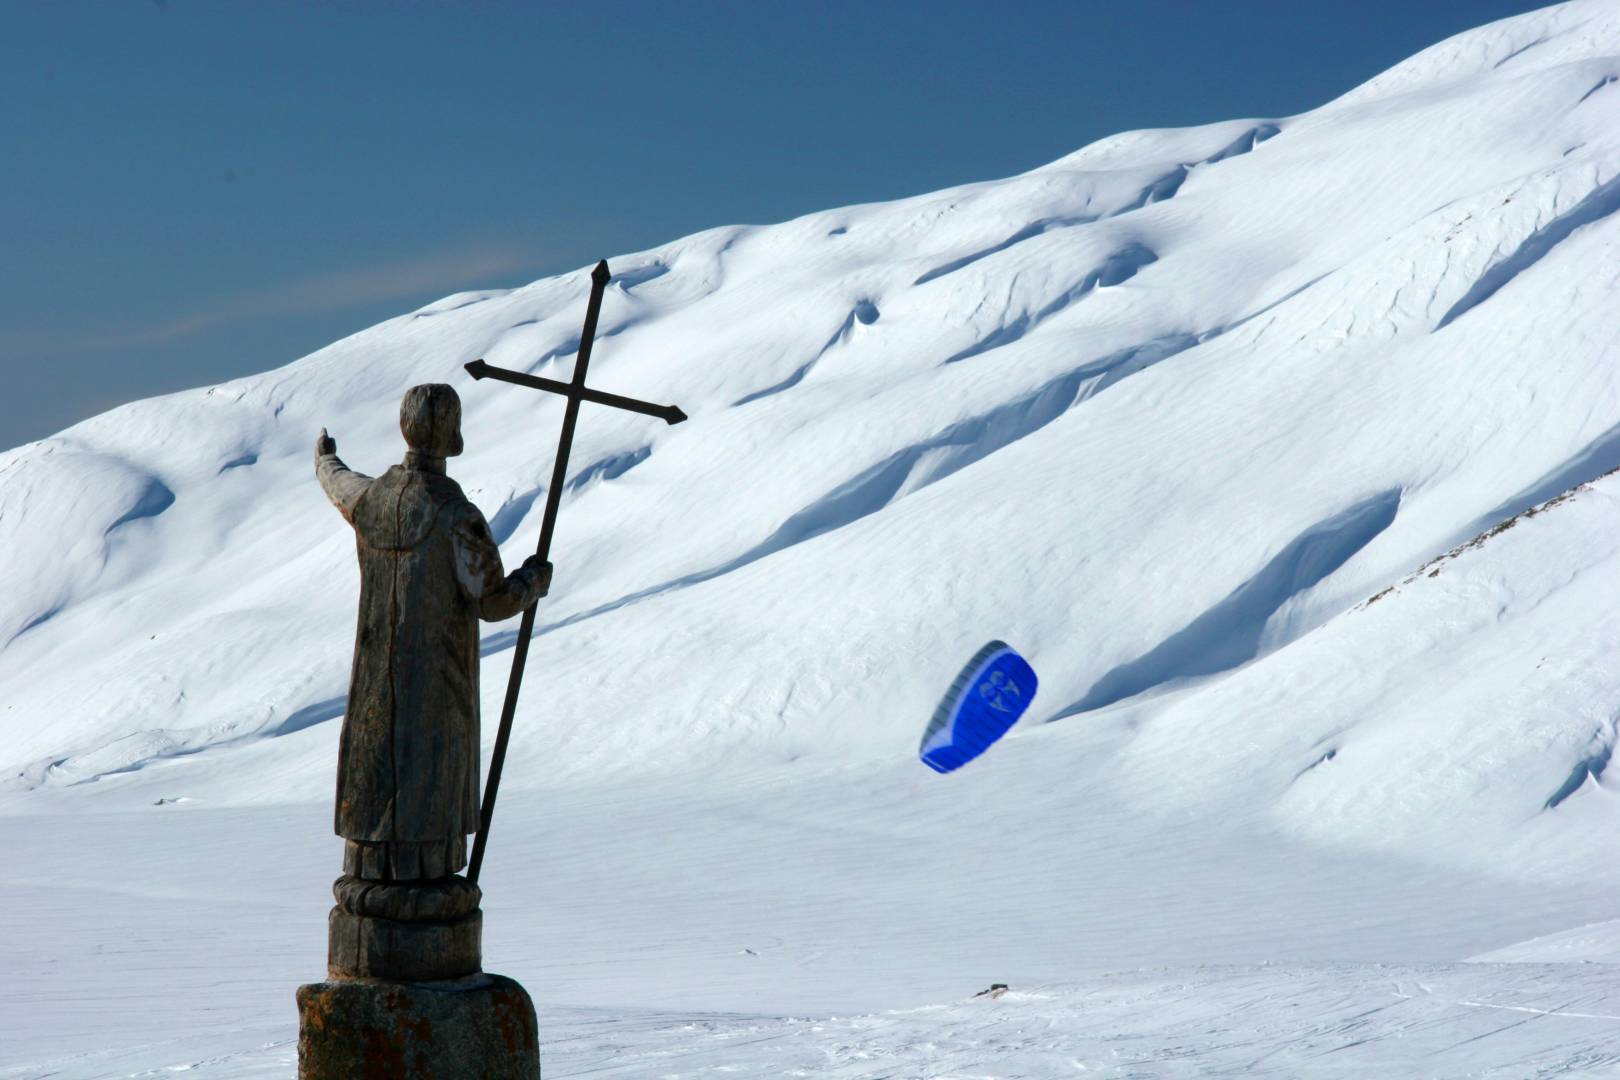 snow kite colle piccolo san bernardo la thuile